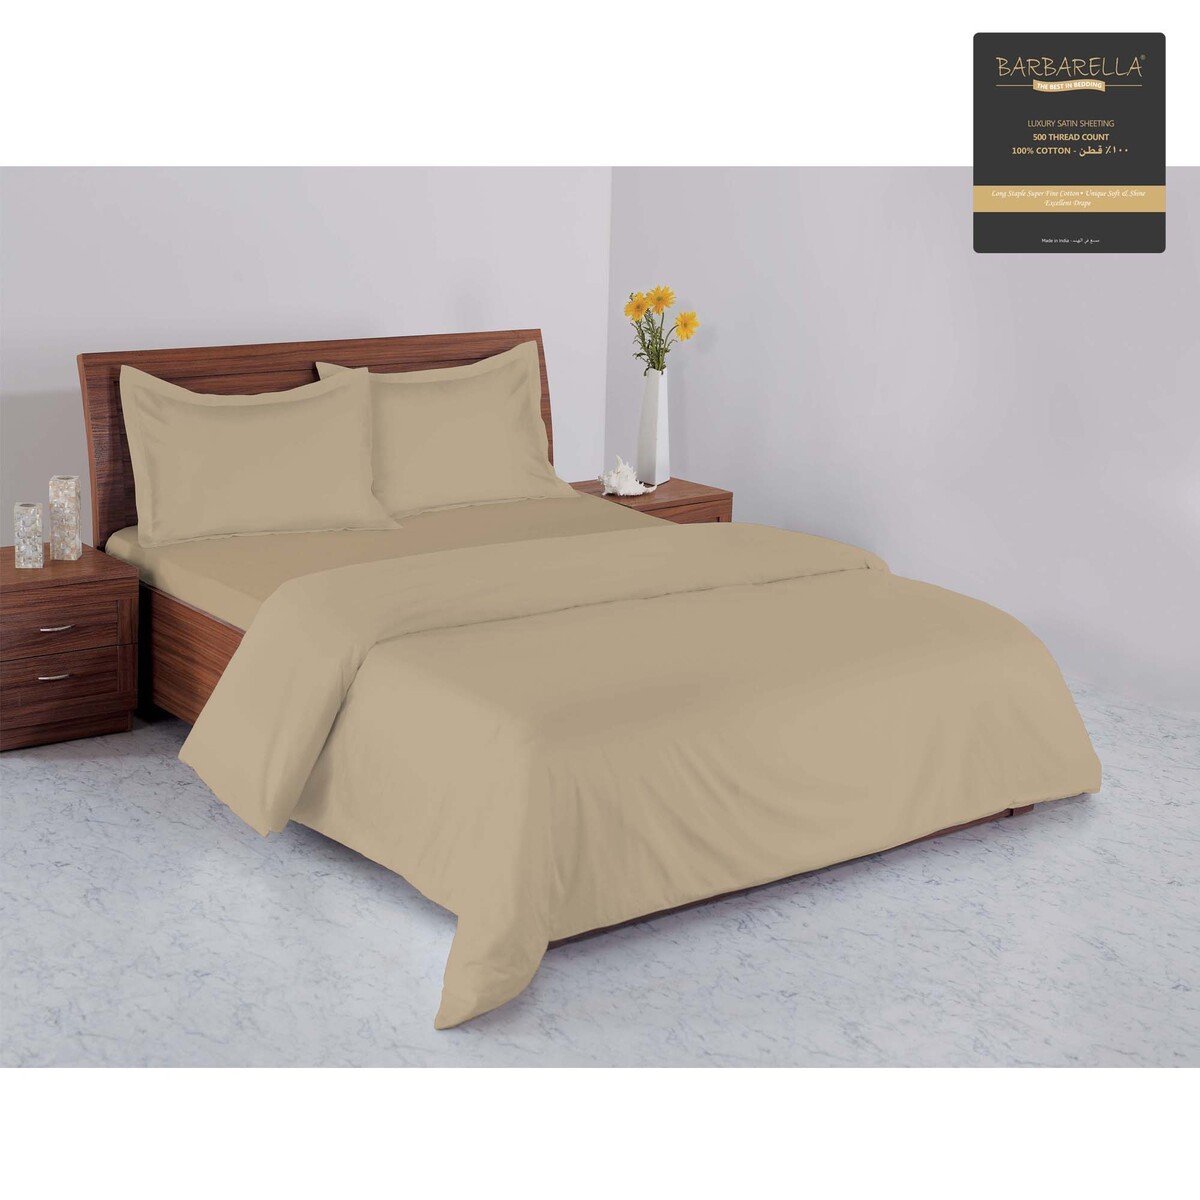 Barbarella Bed Sheet 205x240cm Brown 500TC